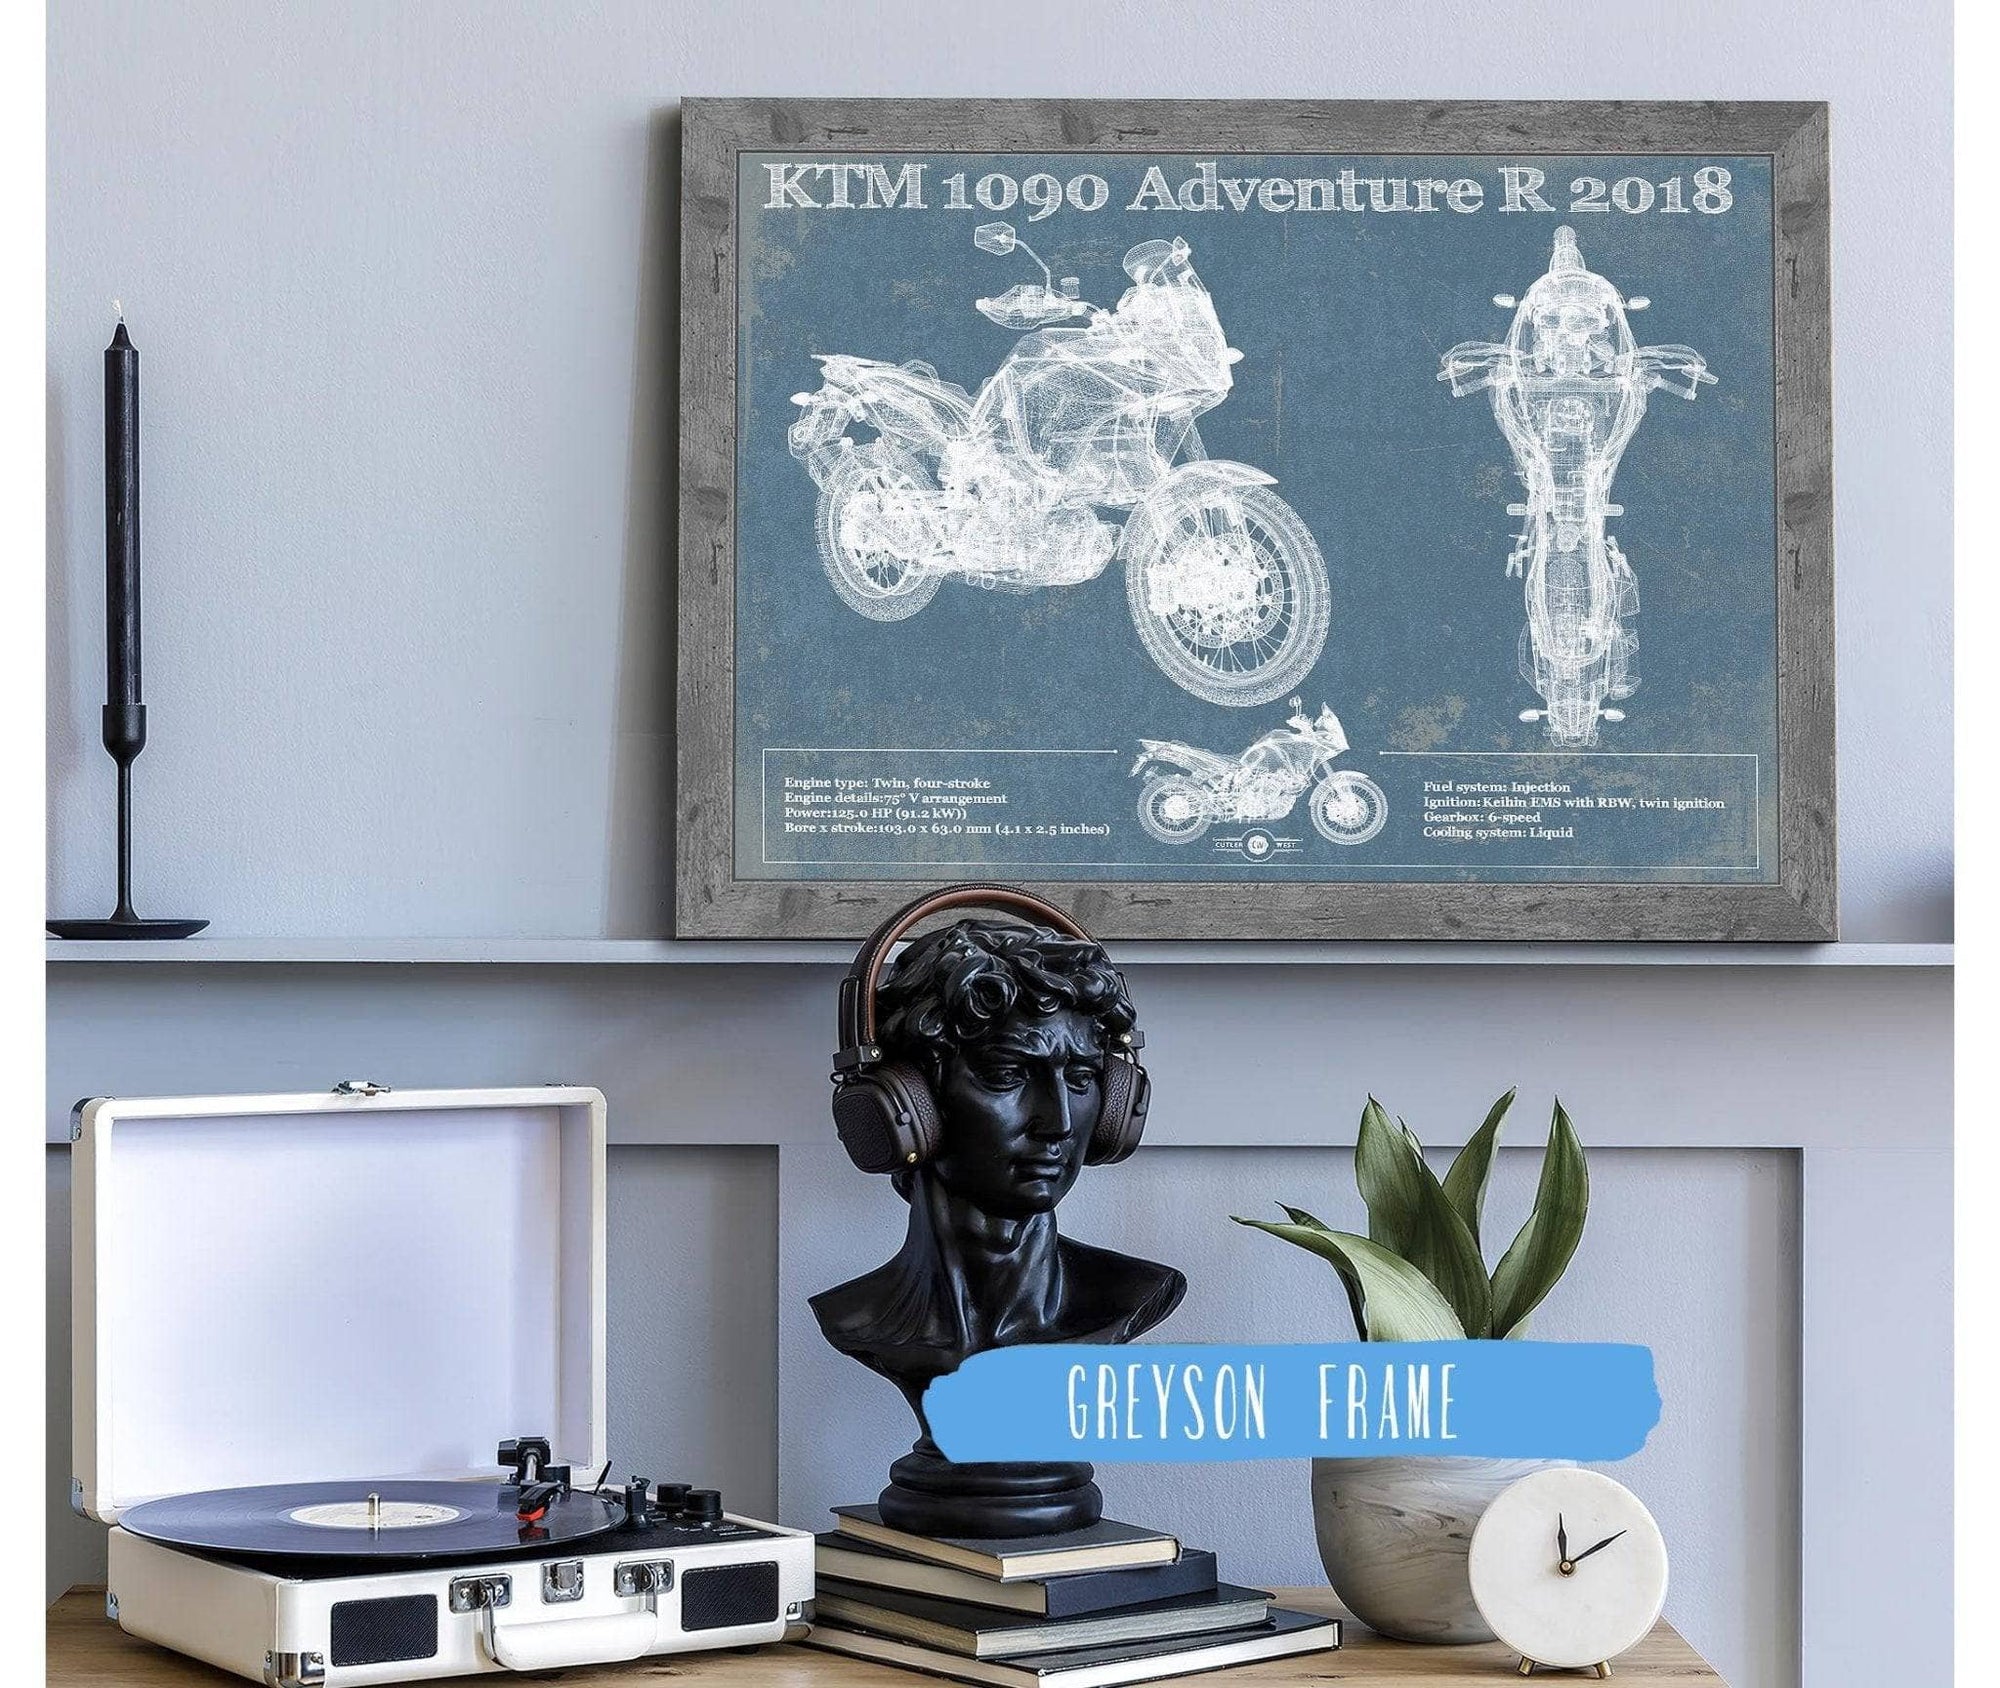 Cutler West 14" x 11" / Greyson Frame KTM 1090 Adventure R 2018 Blueprint Motorcycle Patent Print 845000246_66295